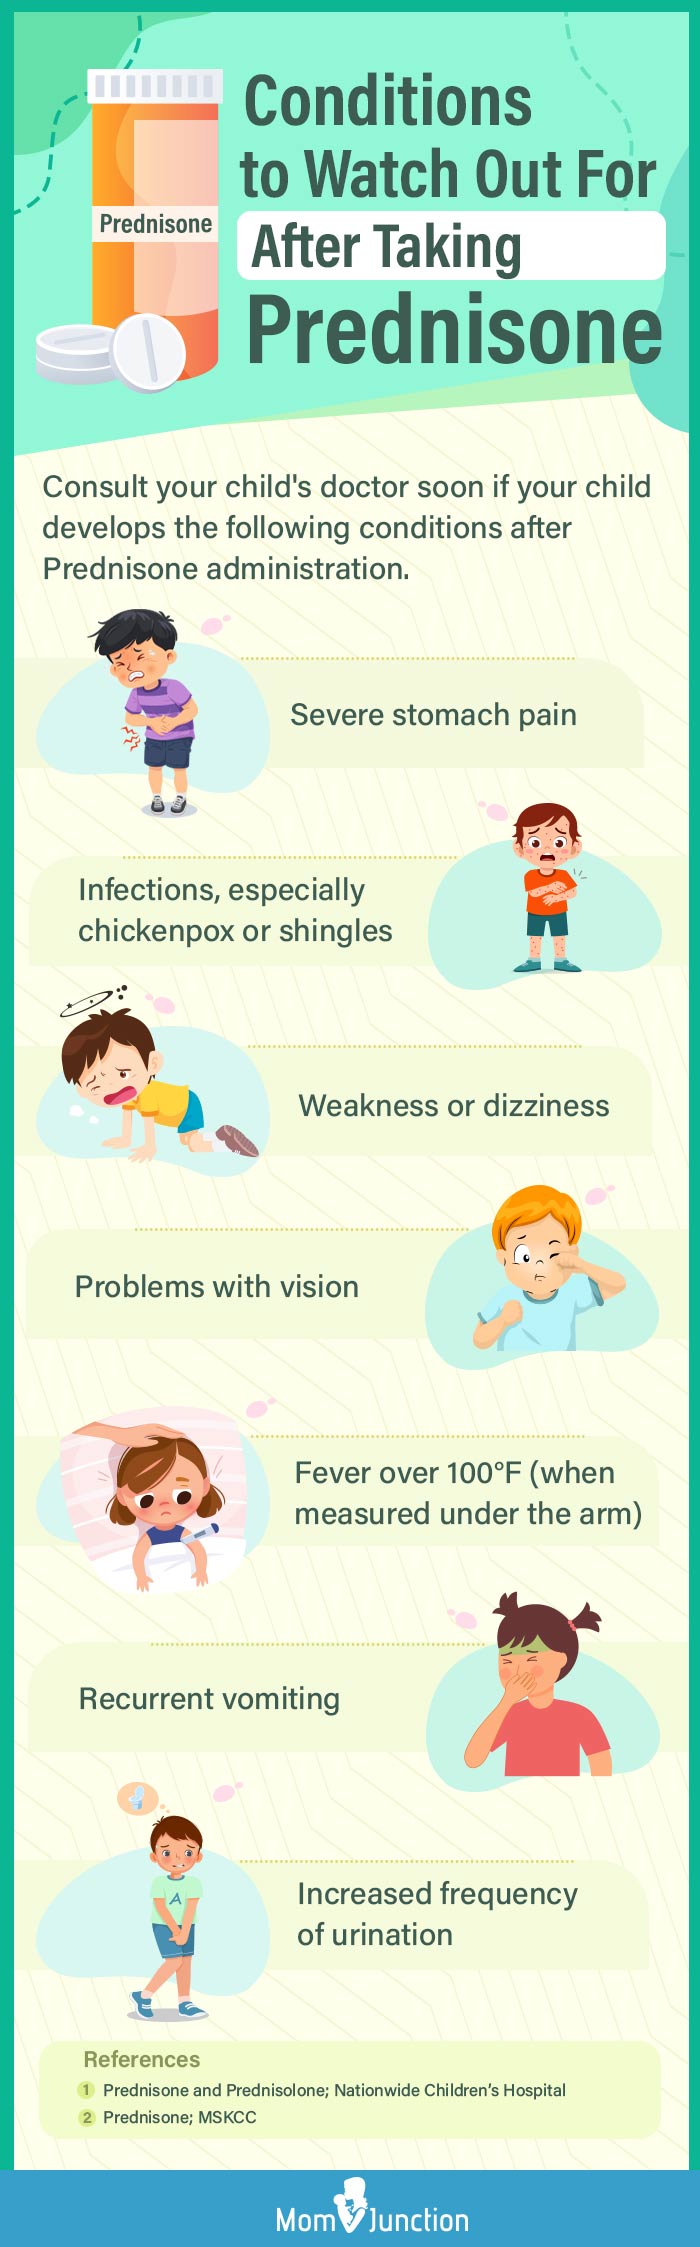 potential reactions to prednisone in children (infographic)